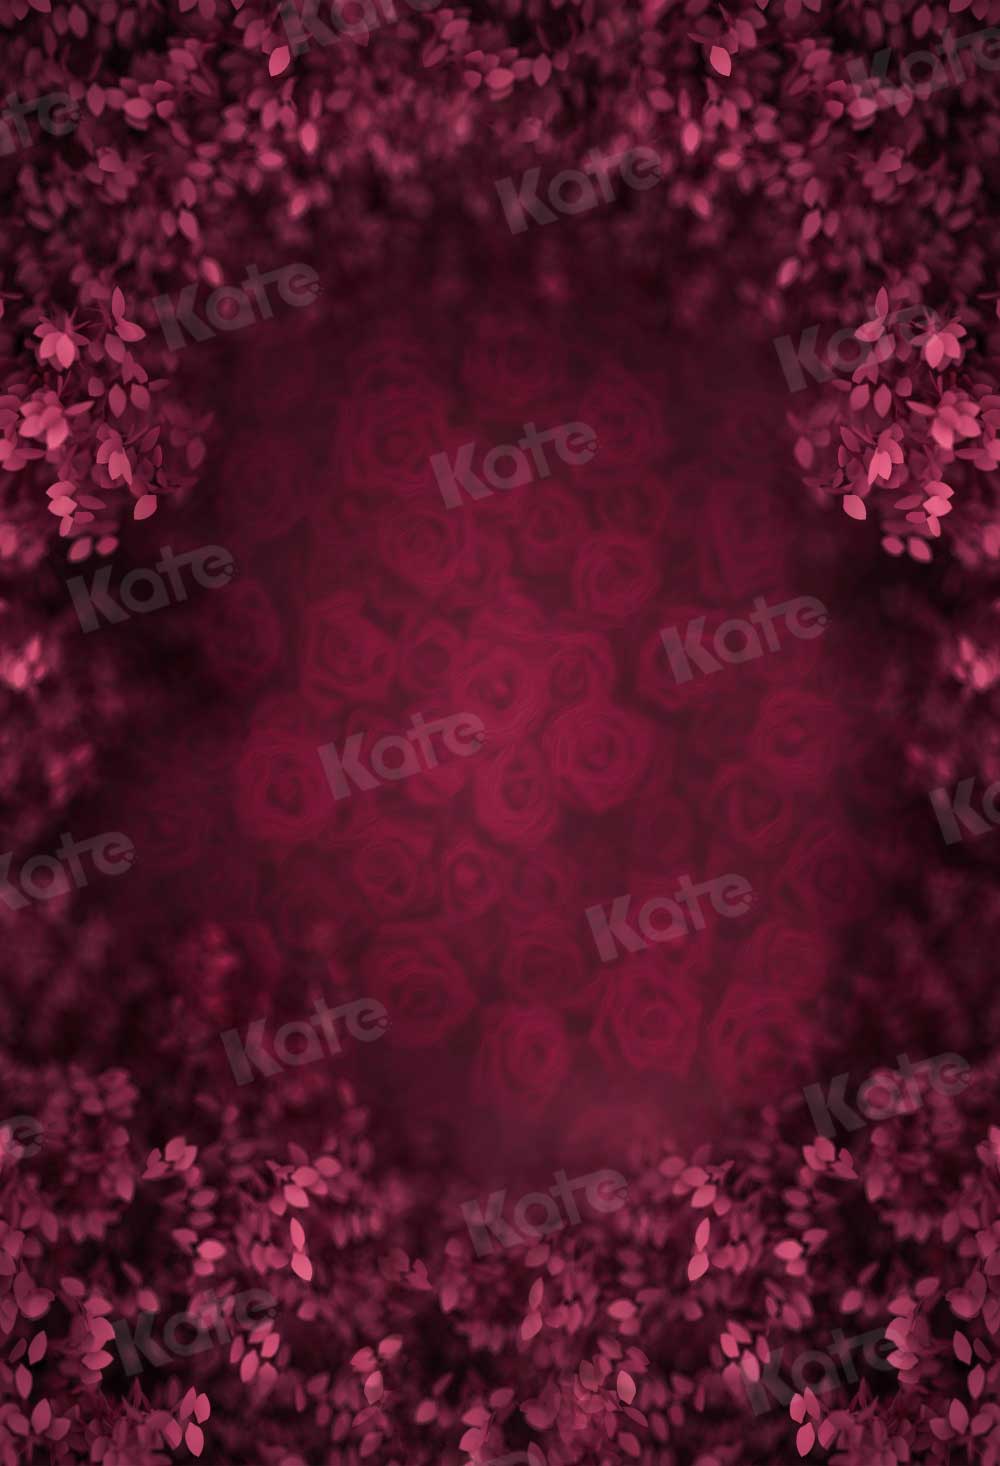 kate赤いバレンタイン抽象的な花の背景